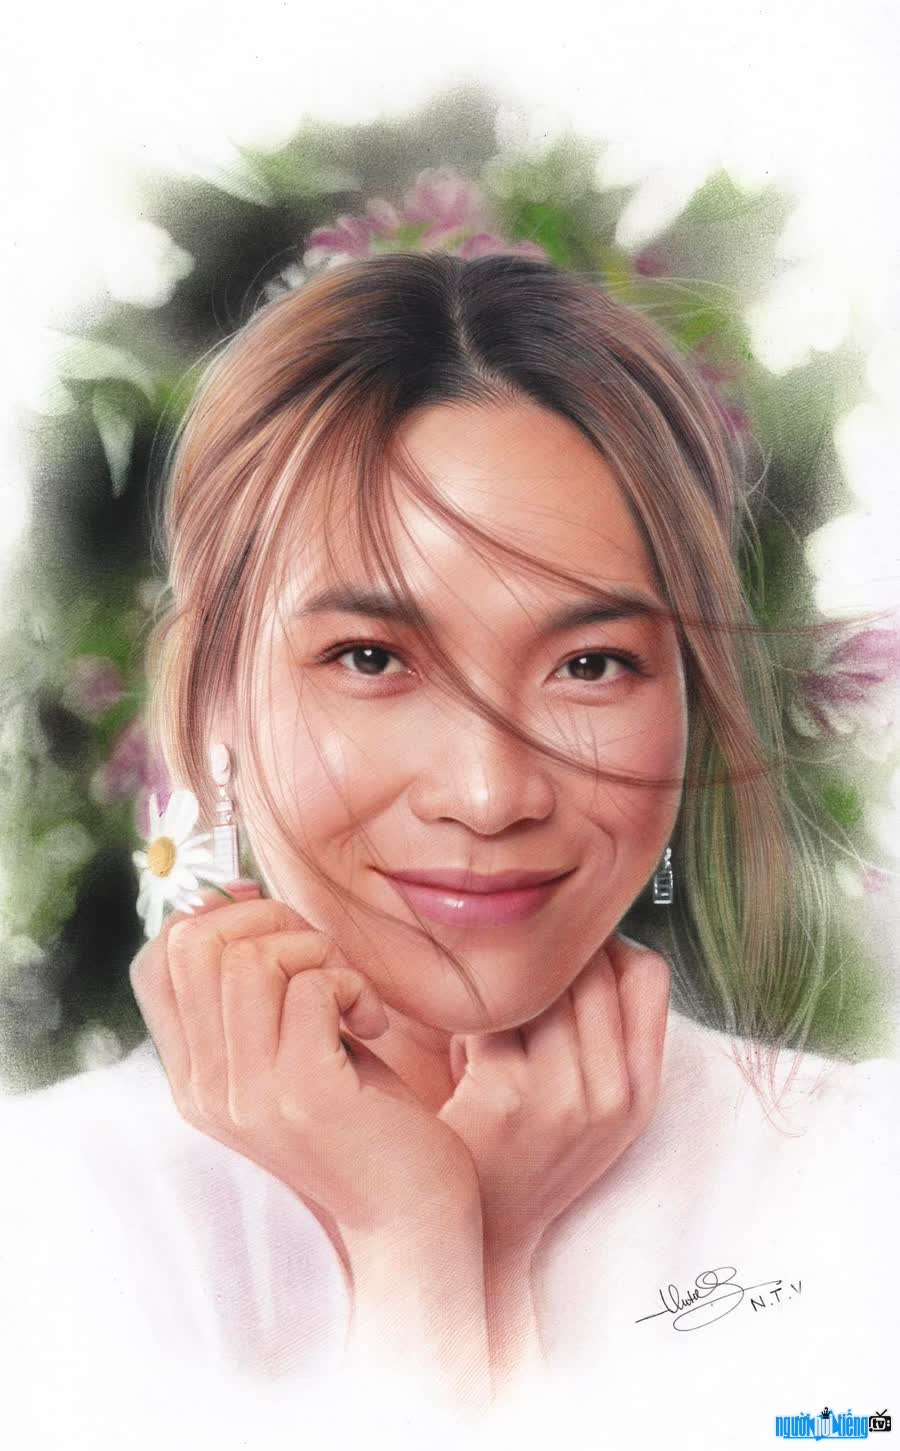 Another beautiful portrait of Nguyen The Vu